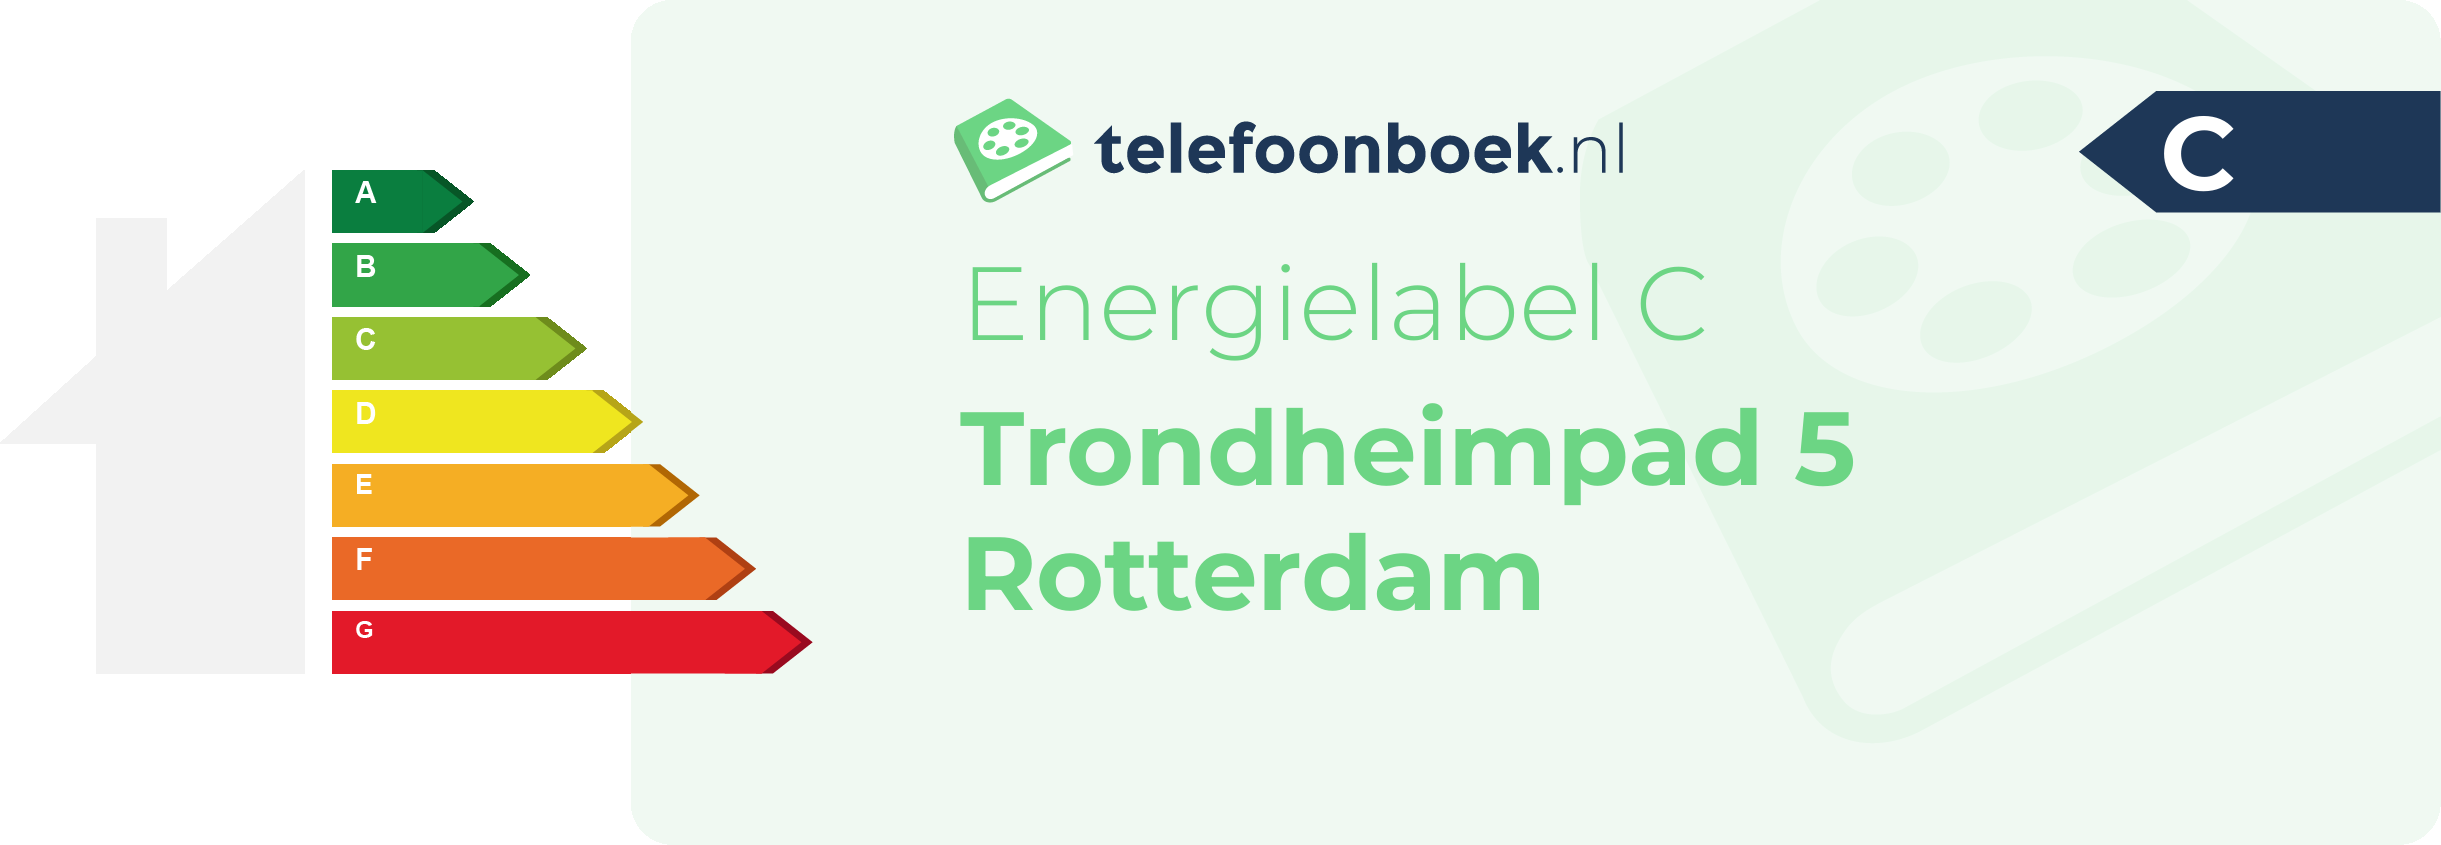 Energielabel Trondheimpad 5 Rotterdam